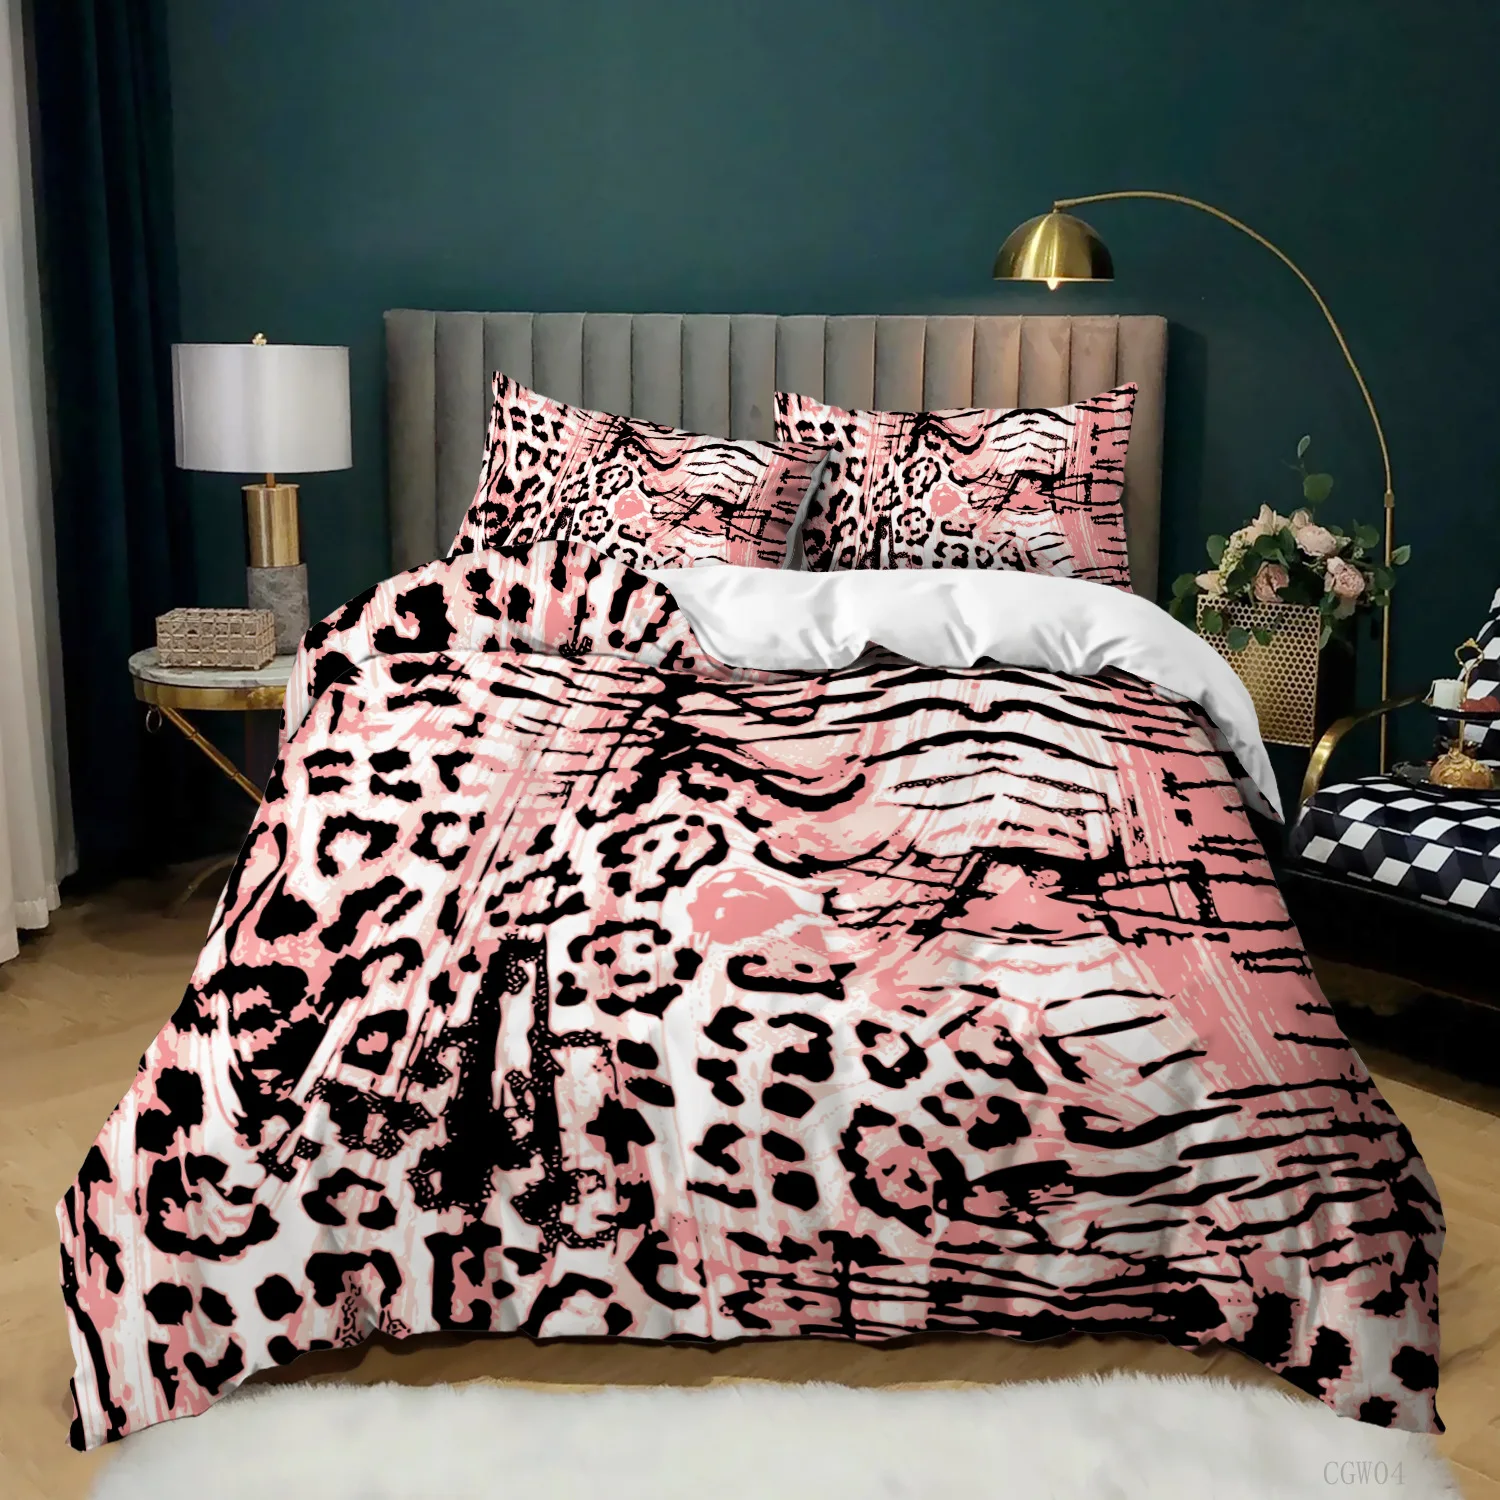 

Leopard Print Duvet Cover Pink Cheetah Print Bedding Set Wild Animal Theme Comforter Cover For Girl Teens Microfiber Quilt Cover